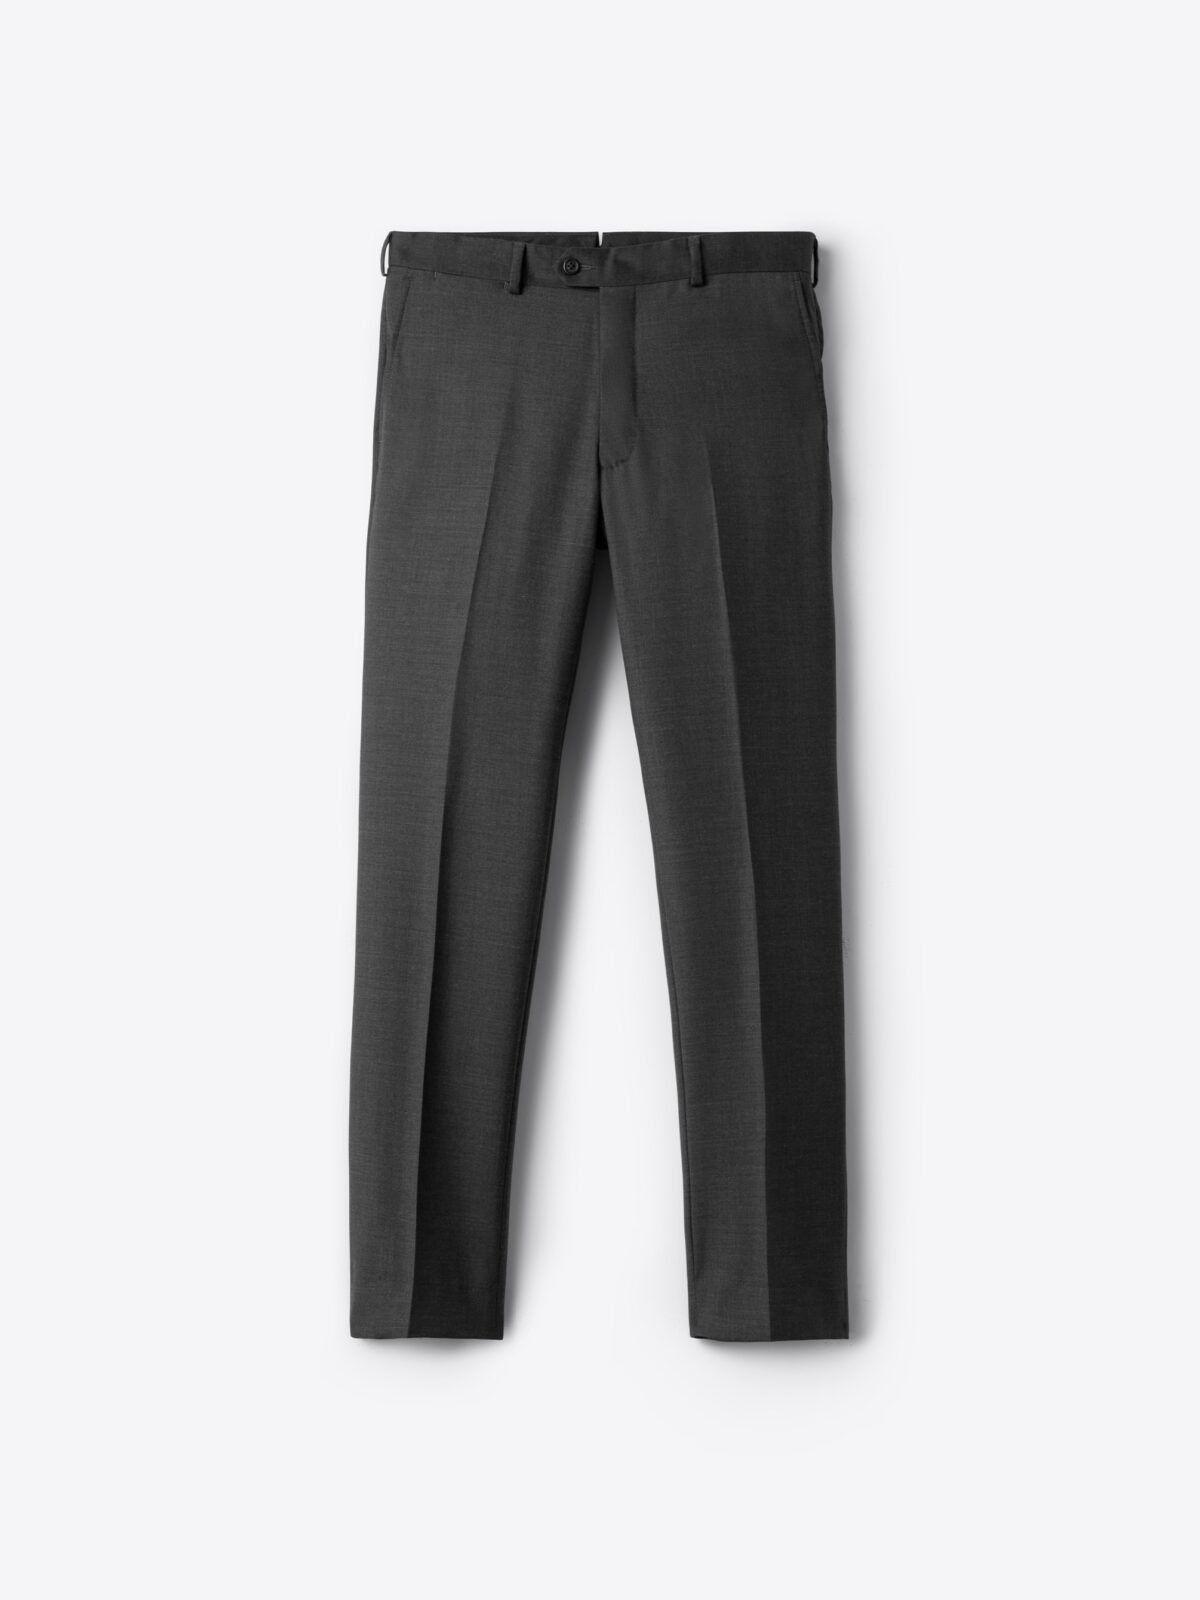 Style Hook Polyster Blend Formal Trousers For Man regular fit, formal pants  black colour, black colour pant, trousers for men, officeial pant